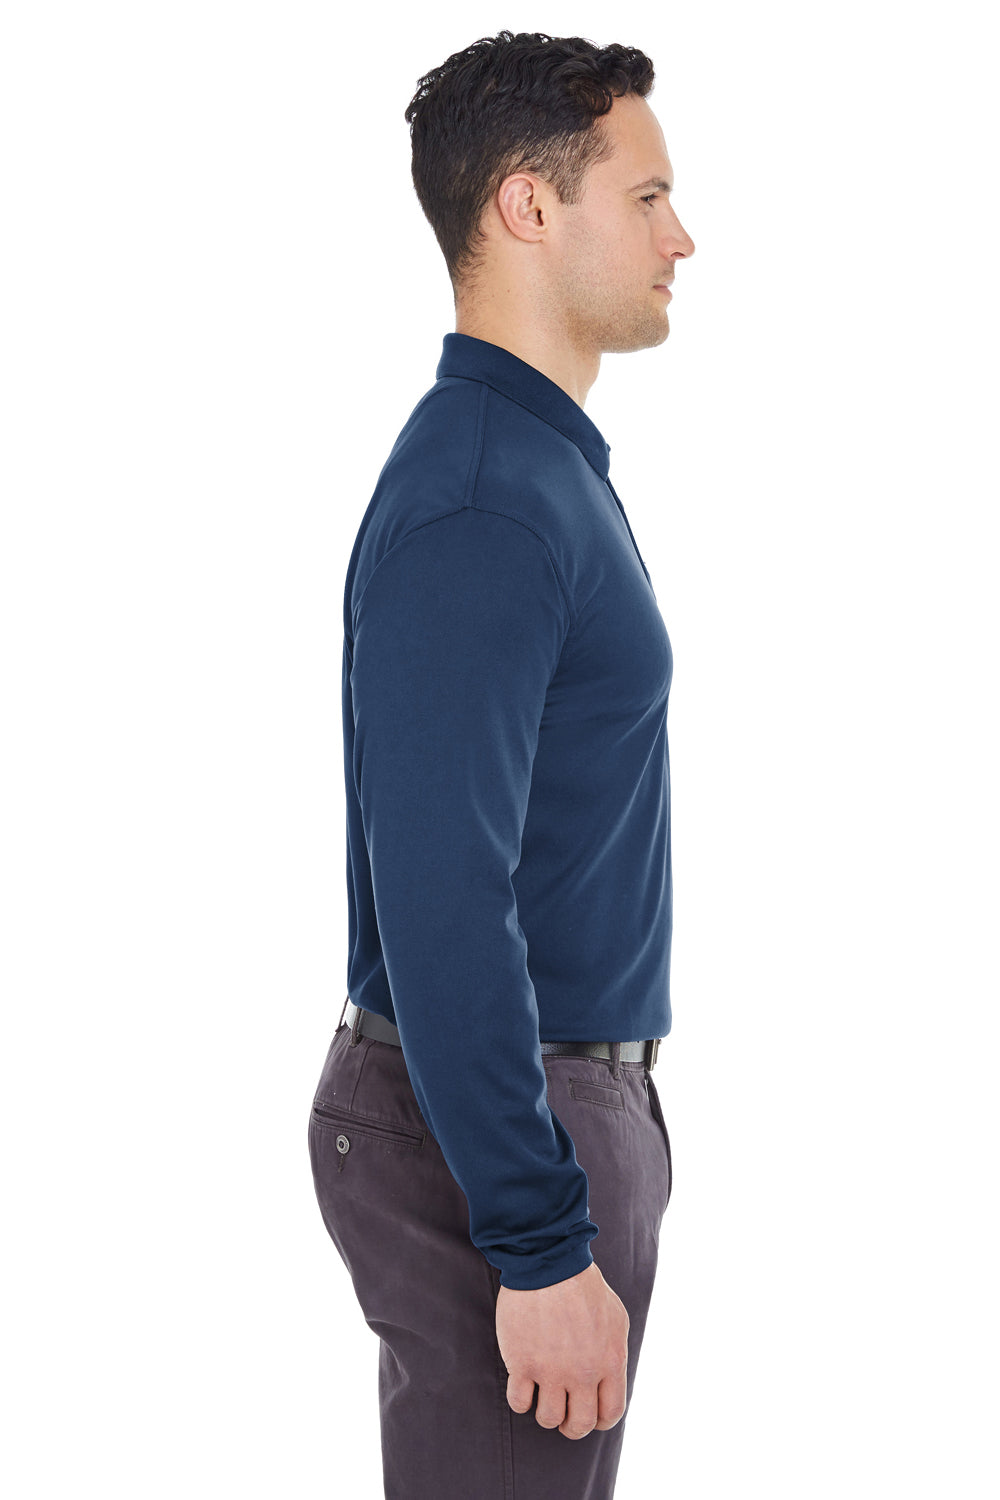 UltraClub 8210LS Mens Cool & Dry Moisture Wicking Long Sleeve Polo Shirt Navy Blue Side